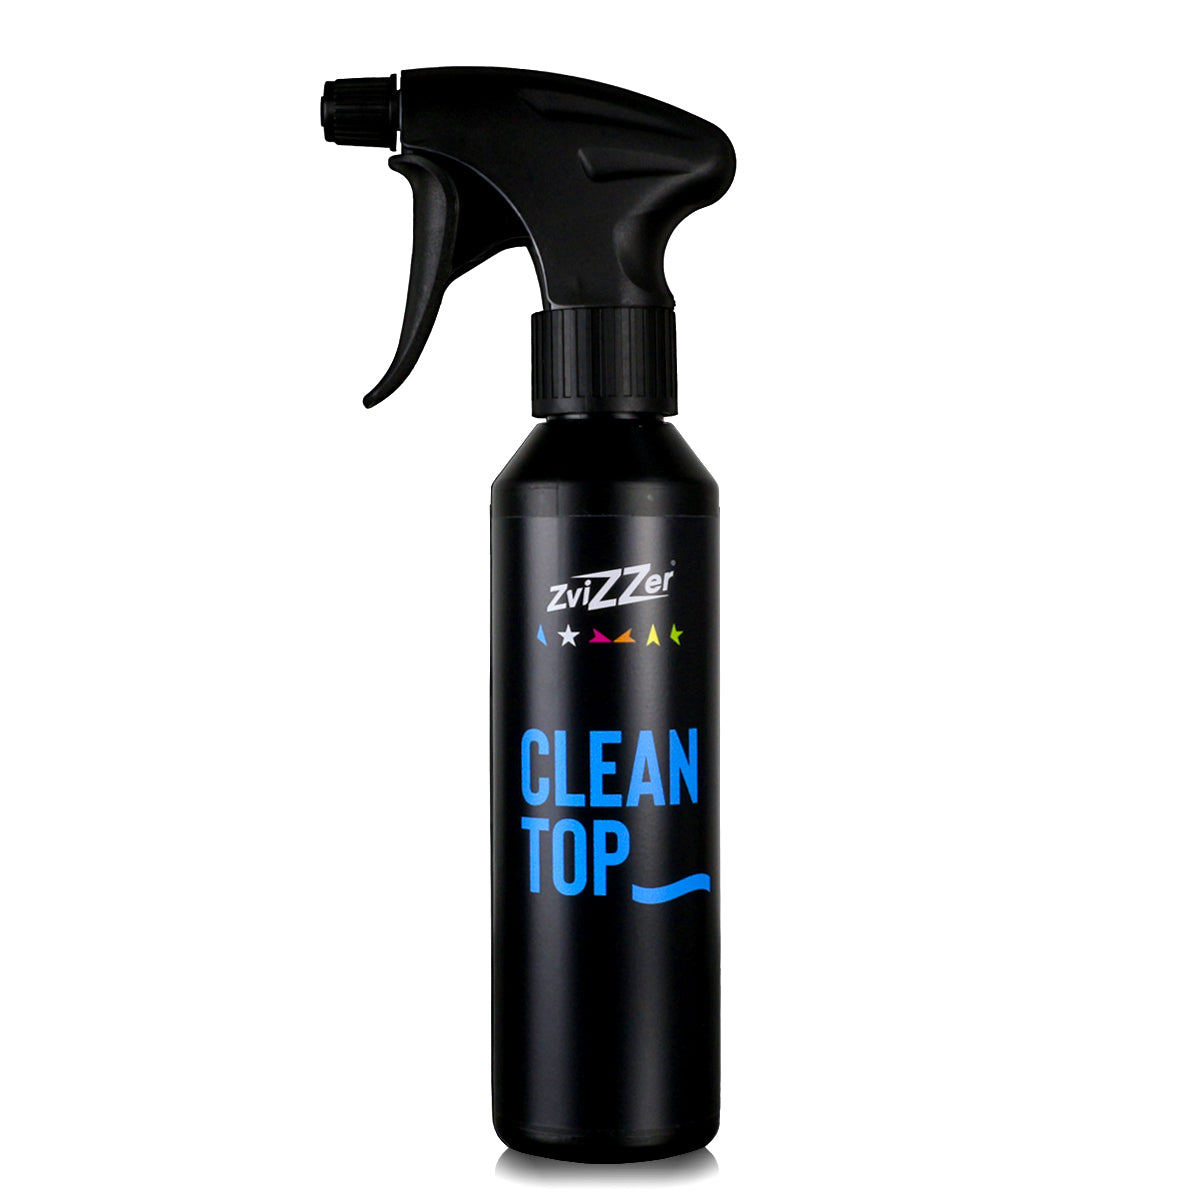 Zvizzer Clean Top 250ml